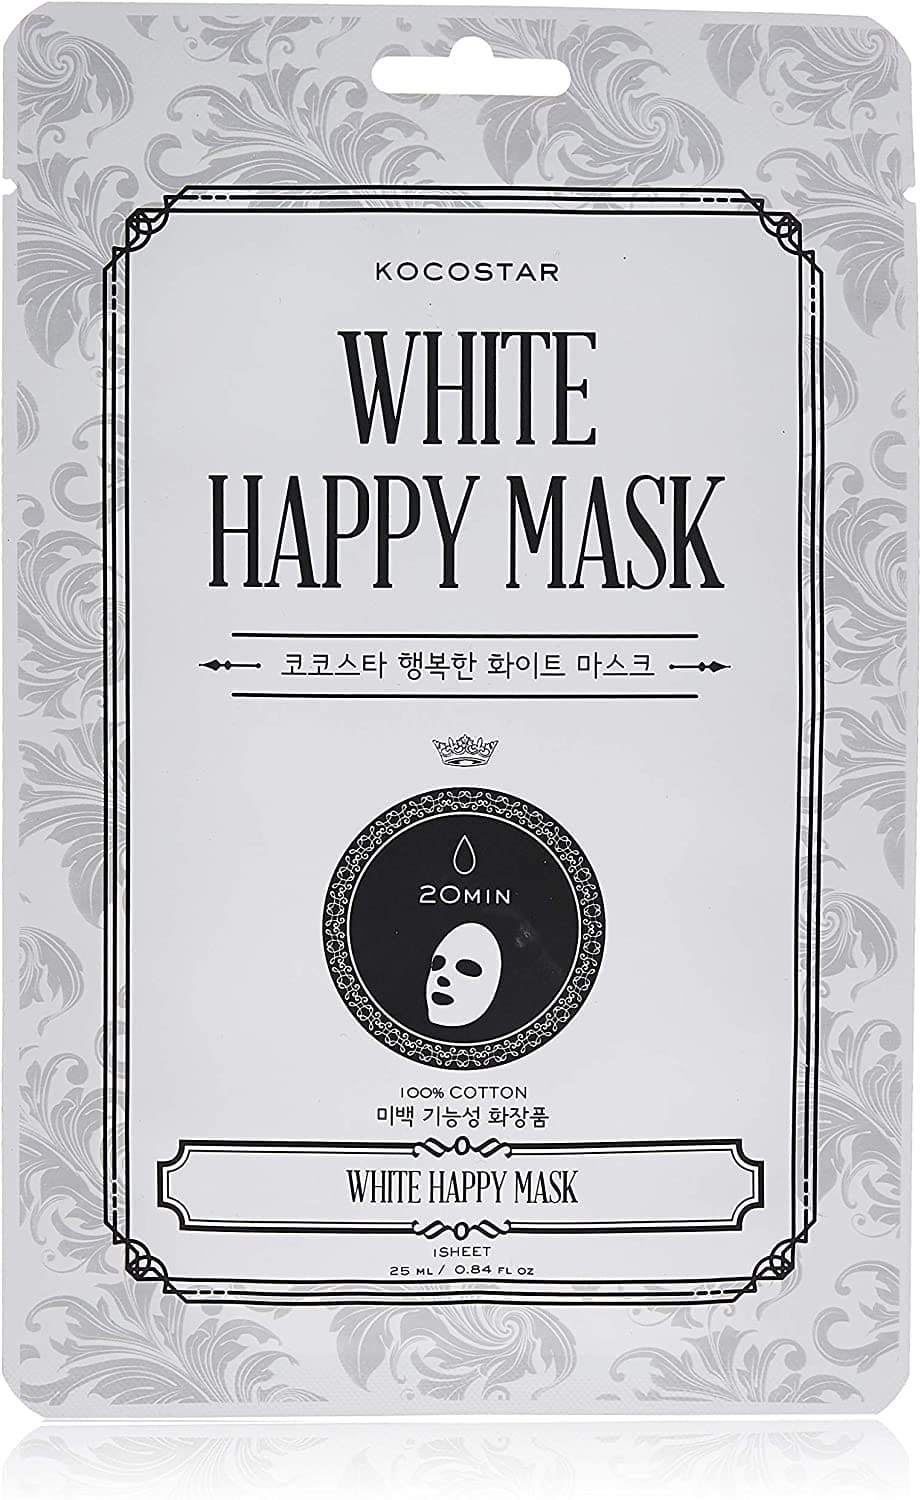 Kocostar White Happy Mask - Premium Skin Care Masks & Peels from Kocostar - Just Rs 363! Shop now at Cozmetica